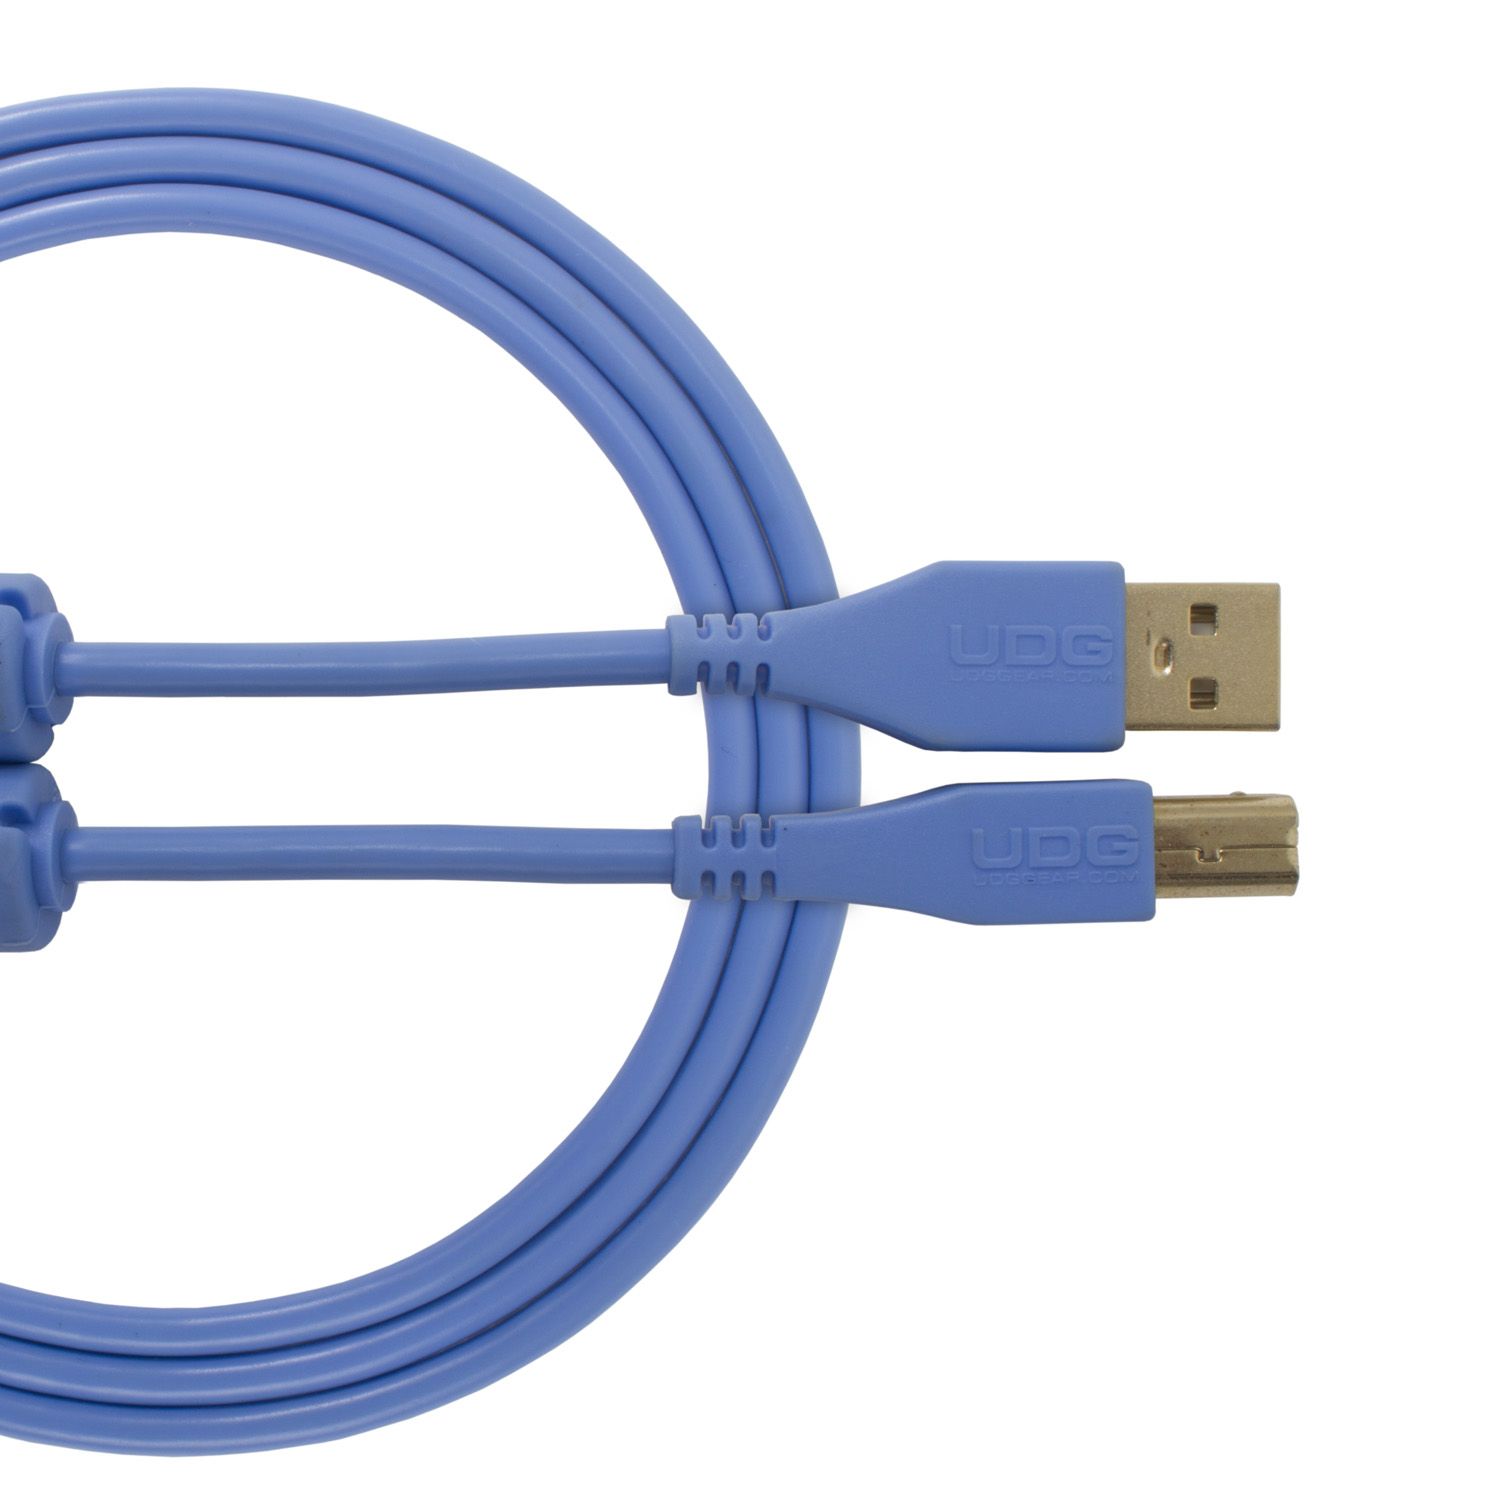 U95003LB UDG AUDIO CABLE USB 2.0 A-B BLUE STRA 3M